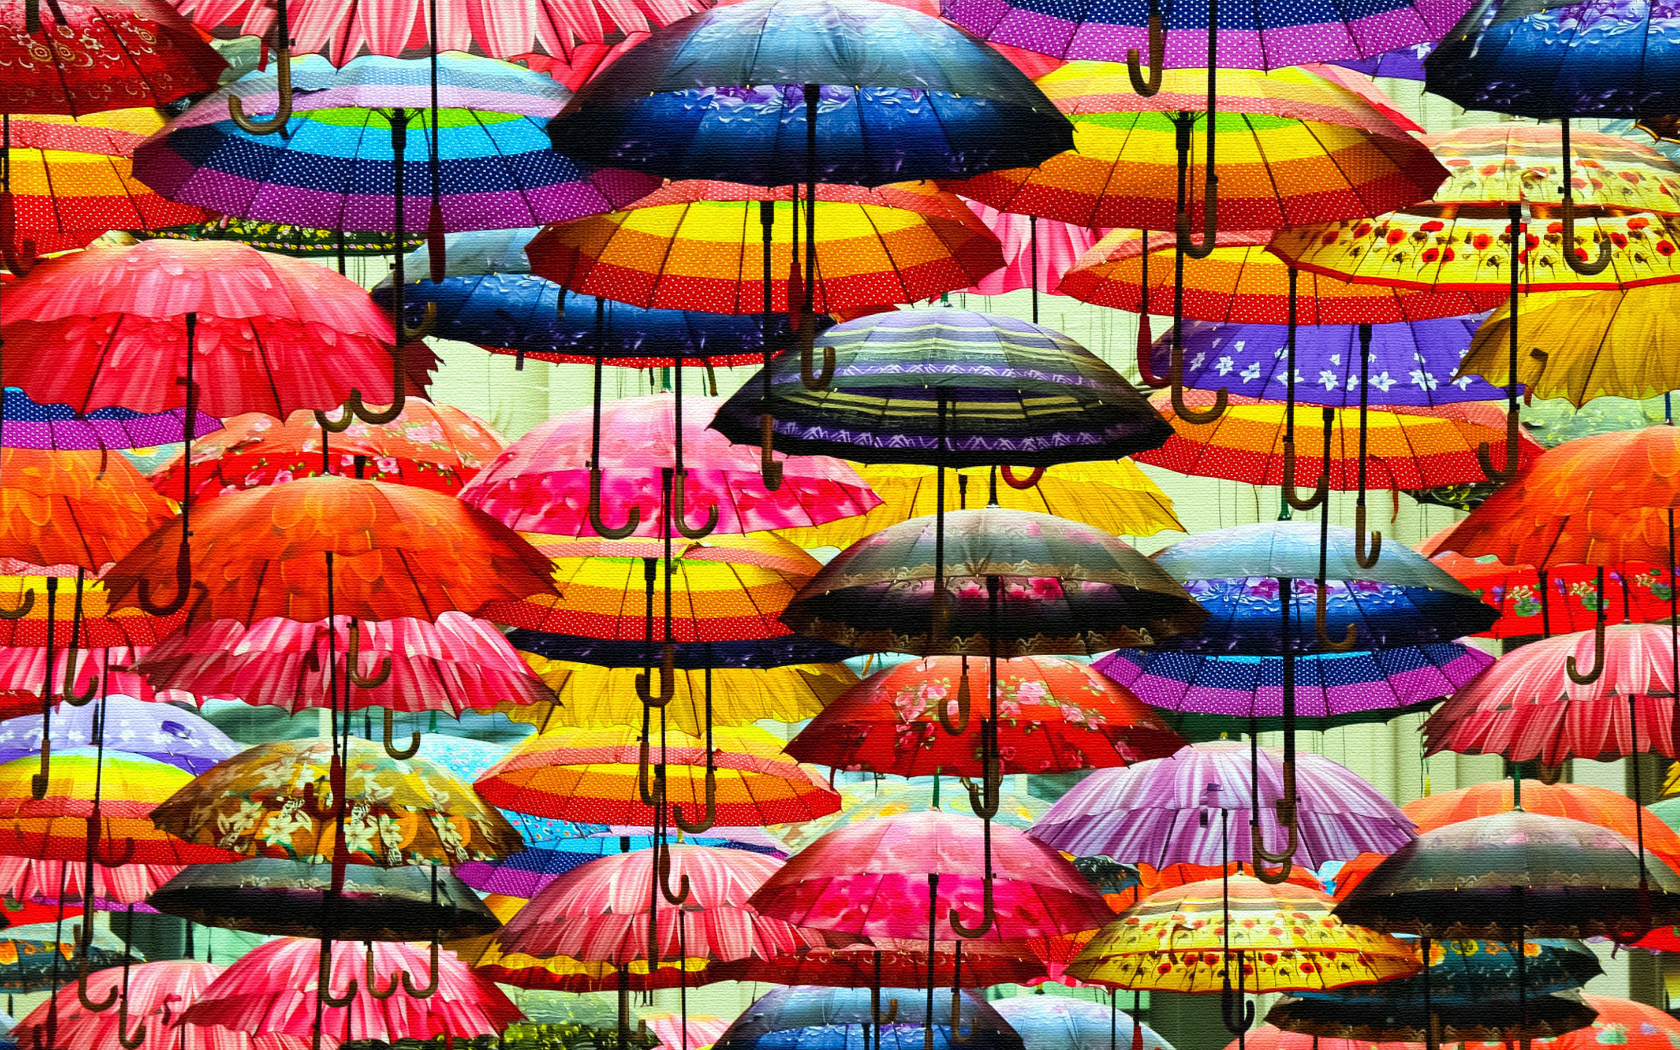 A lot of multi-colored umbrella in the air